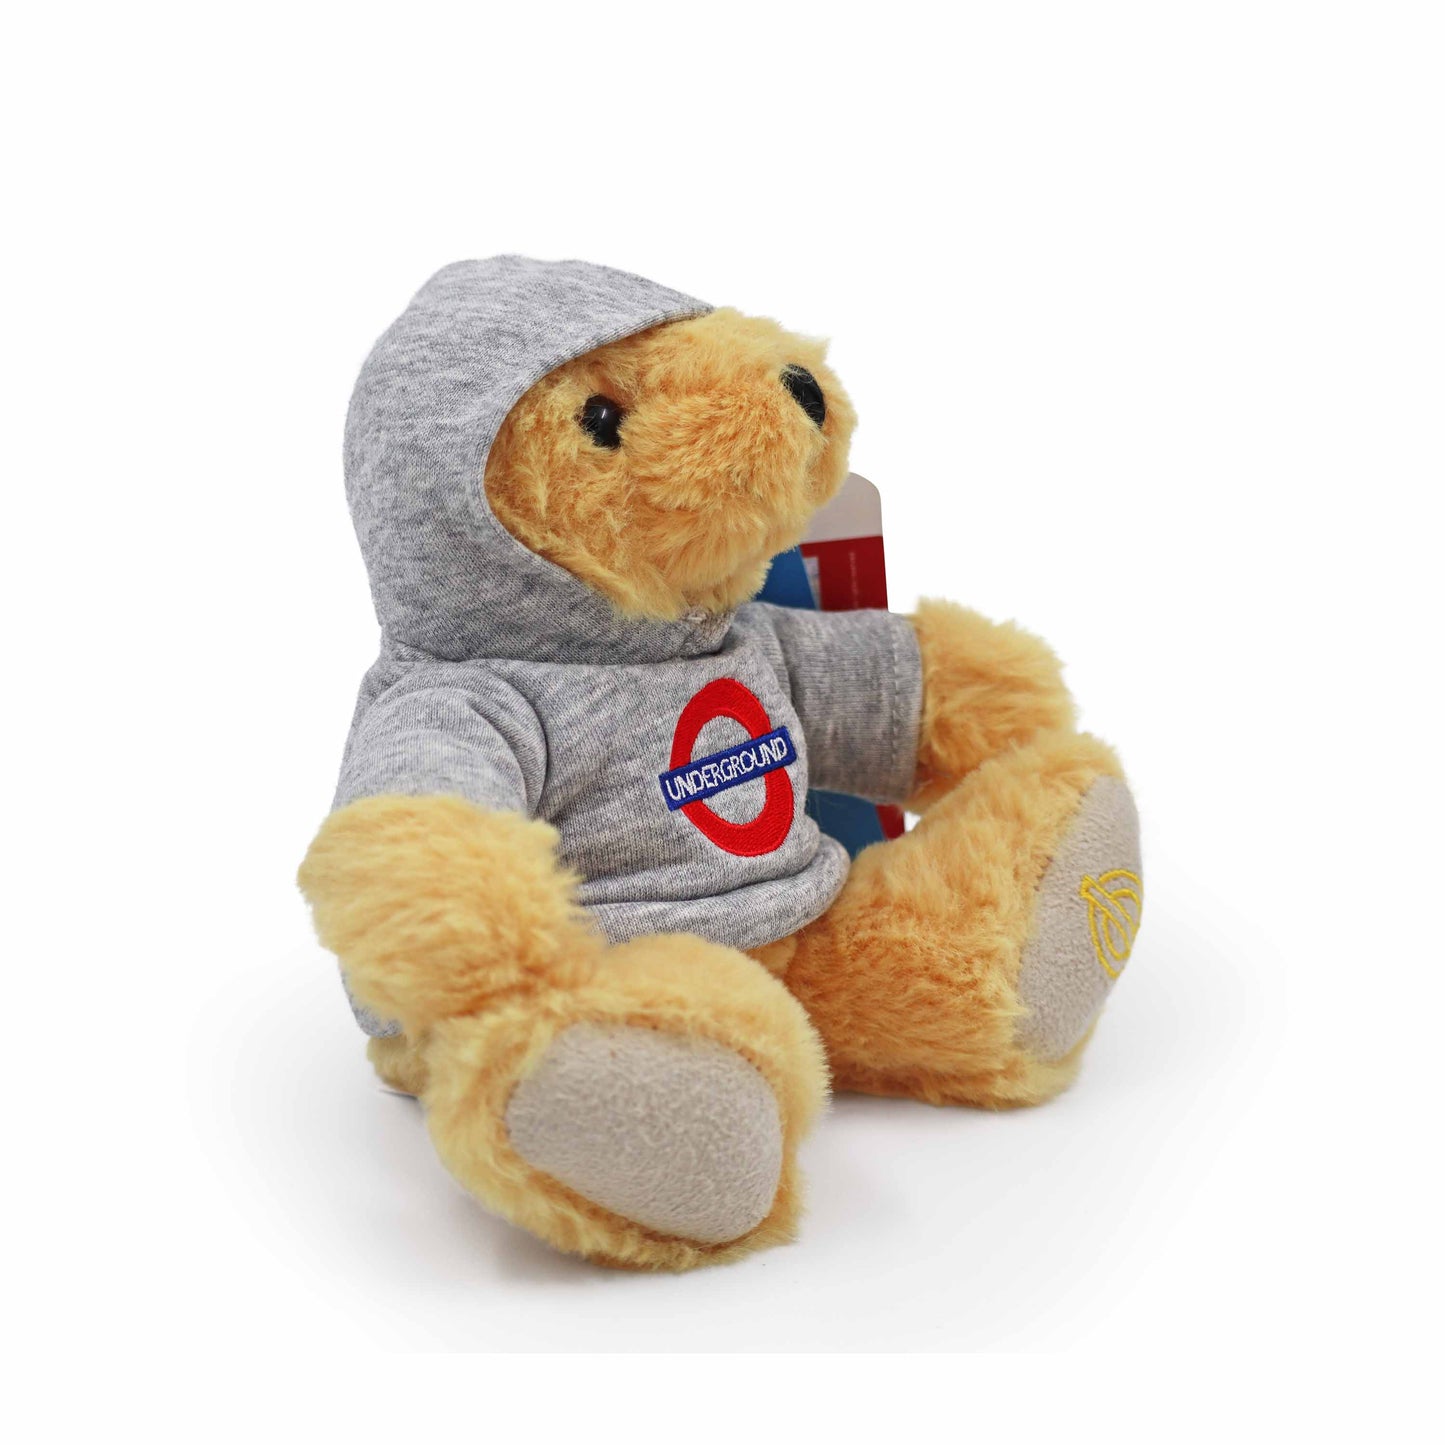 London Underground Teddy Bear - Official Merchandise